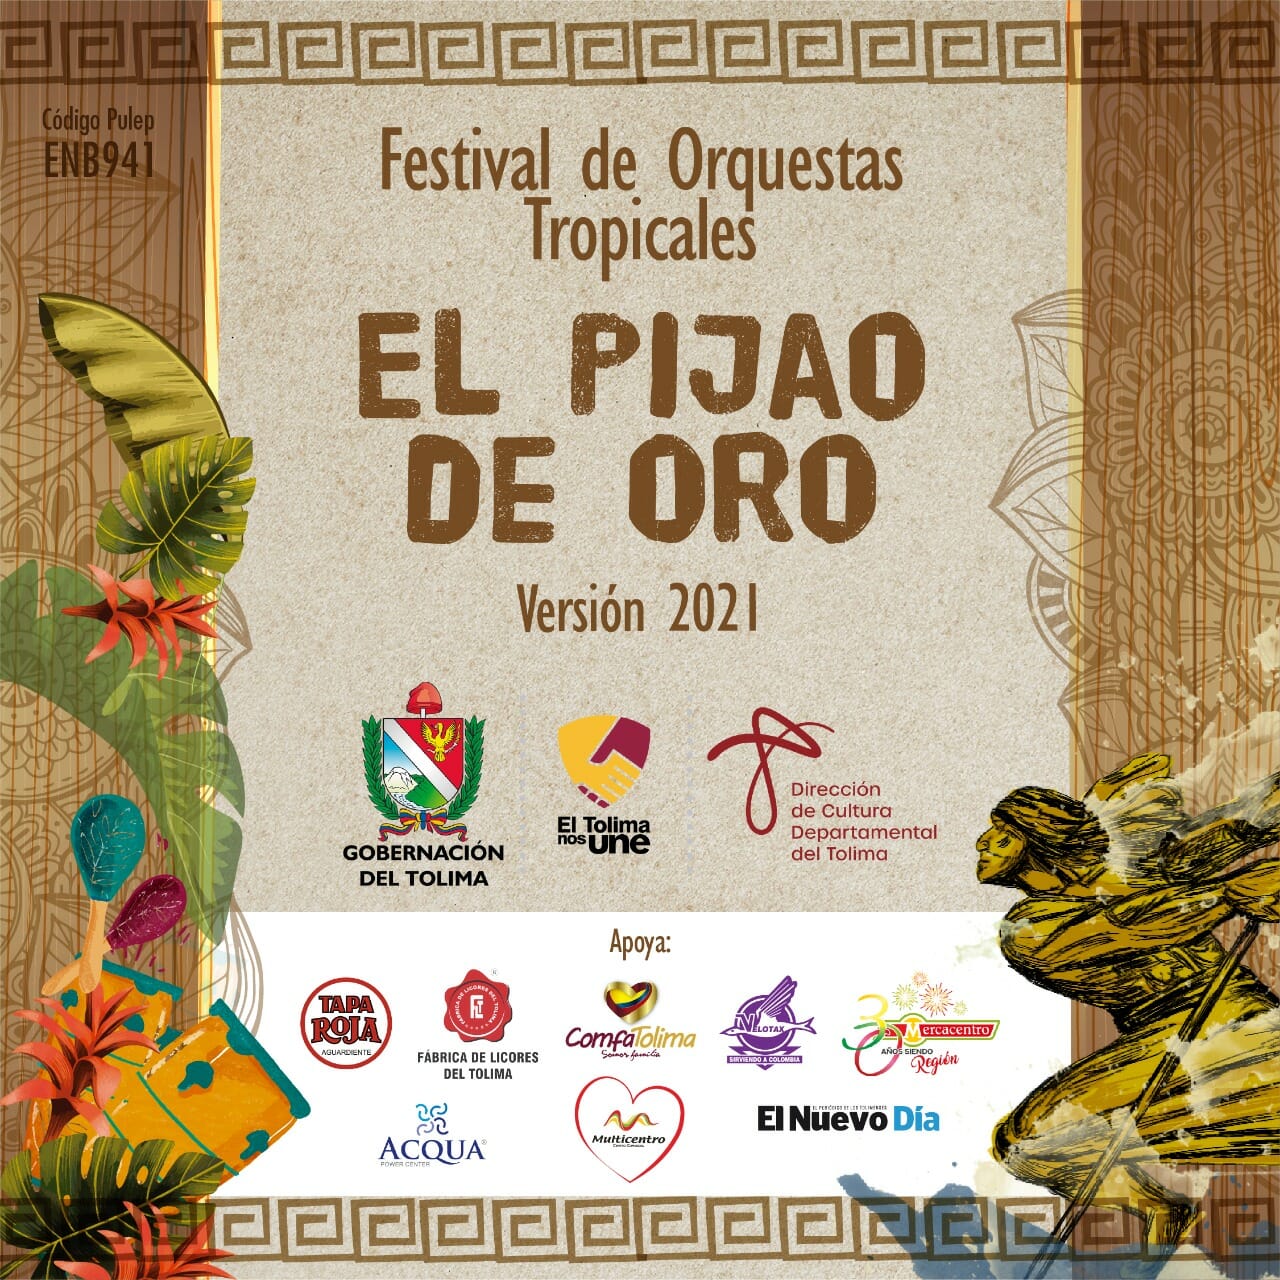 Prográmese este fin de semana para asistir al Festival de Orquestas Pijao de Oro. 6